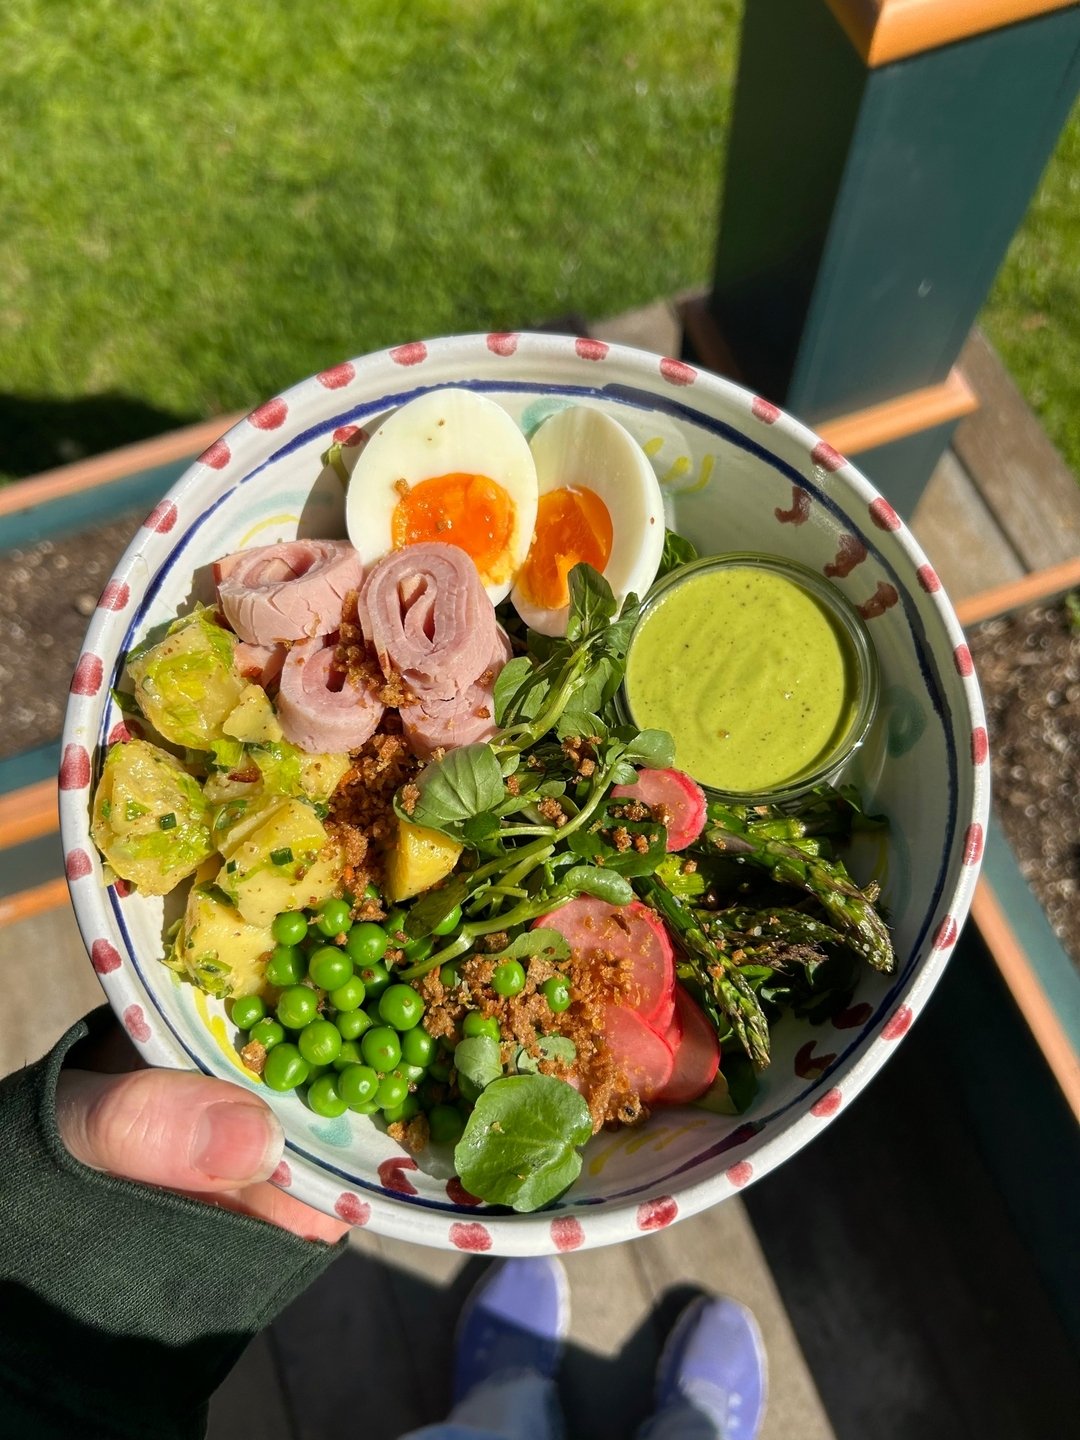 Our Farm Salad features all the springtime highlights: wild watercress, spring asparagus, peas, mint, dill, rainbow eggs, and shallots